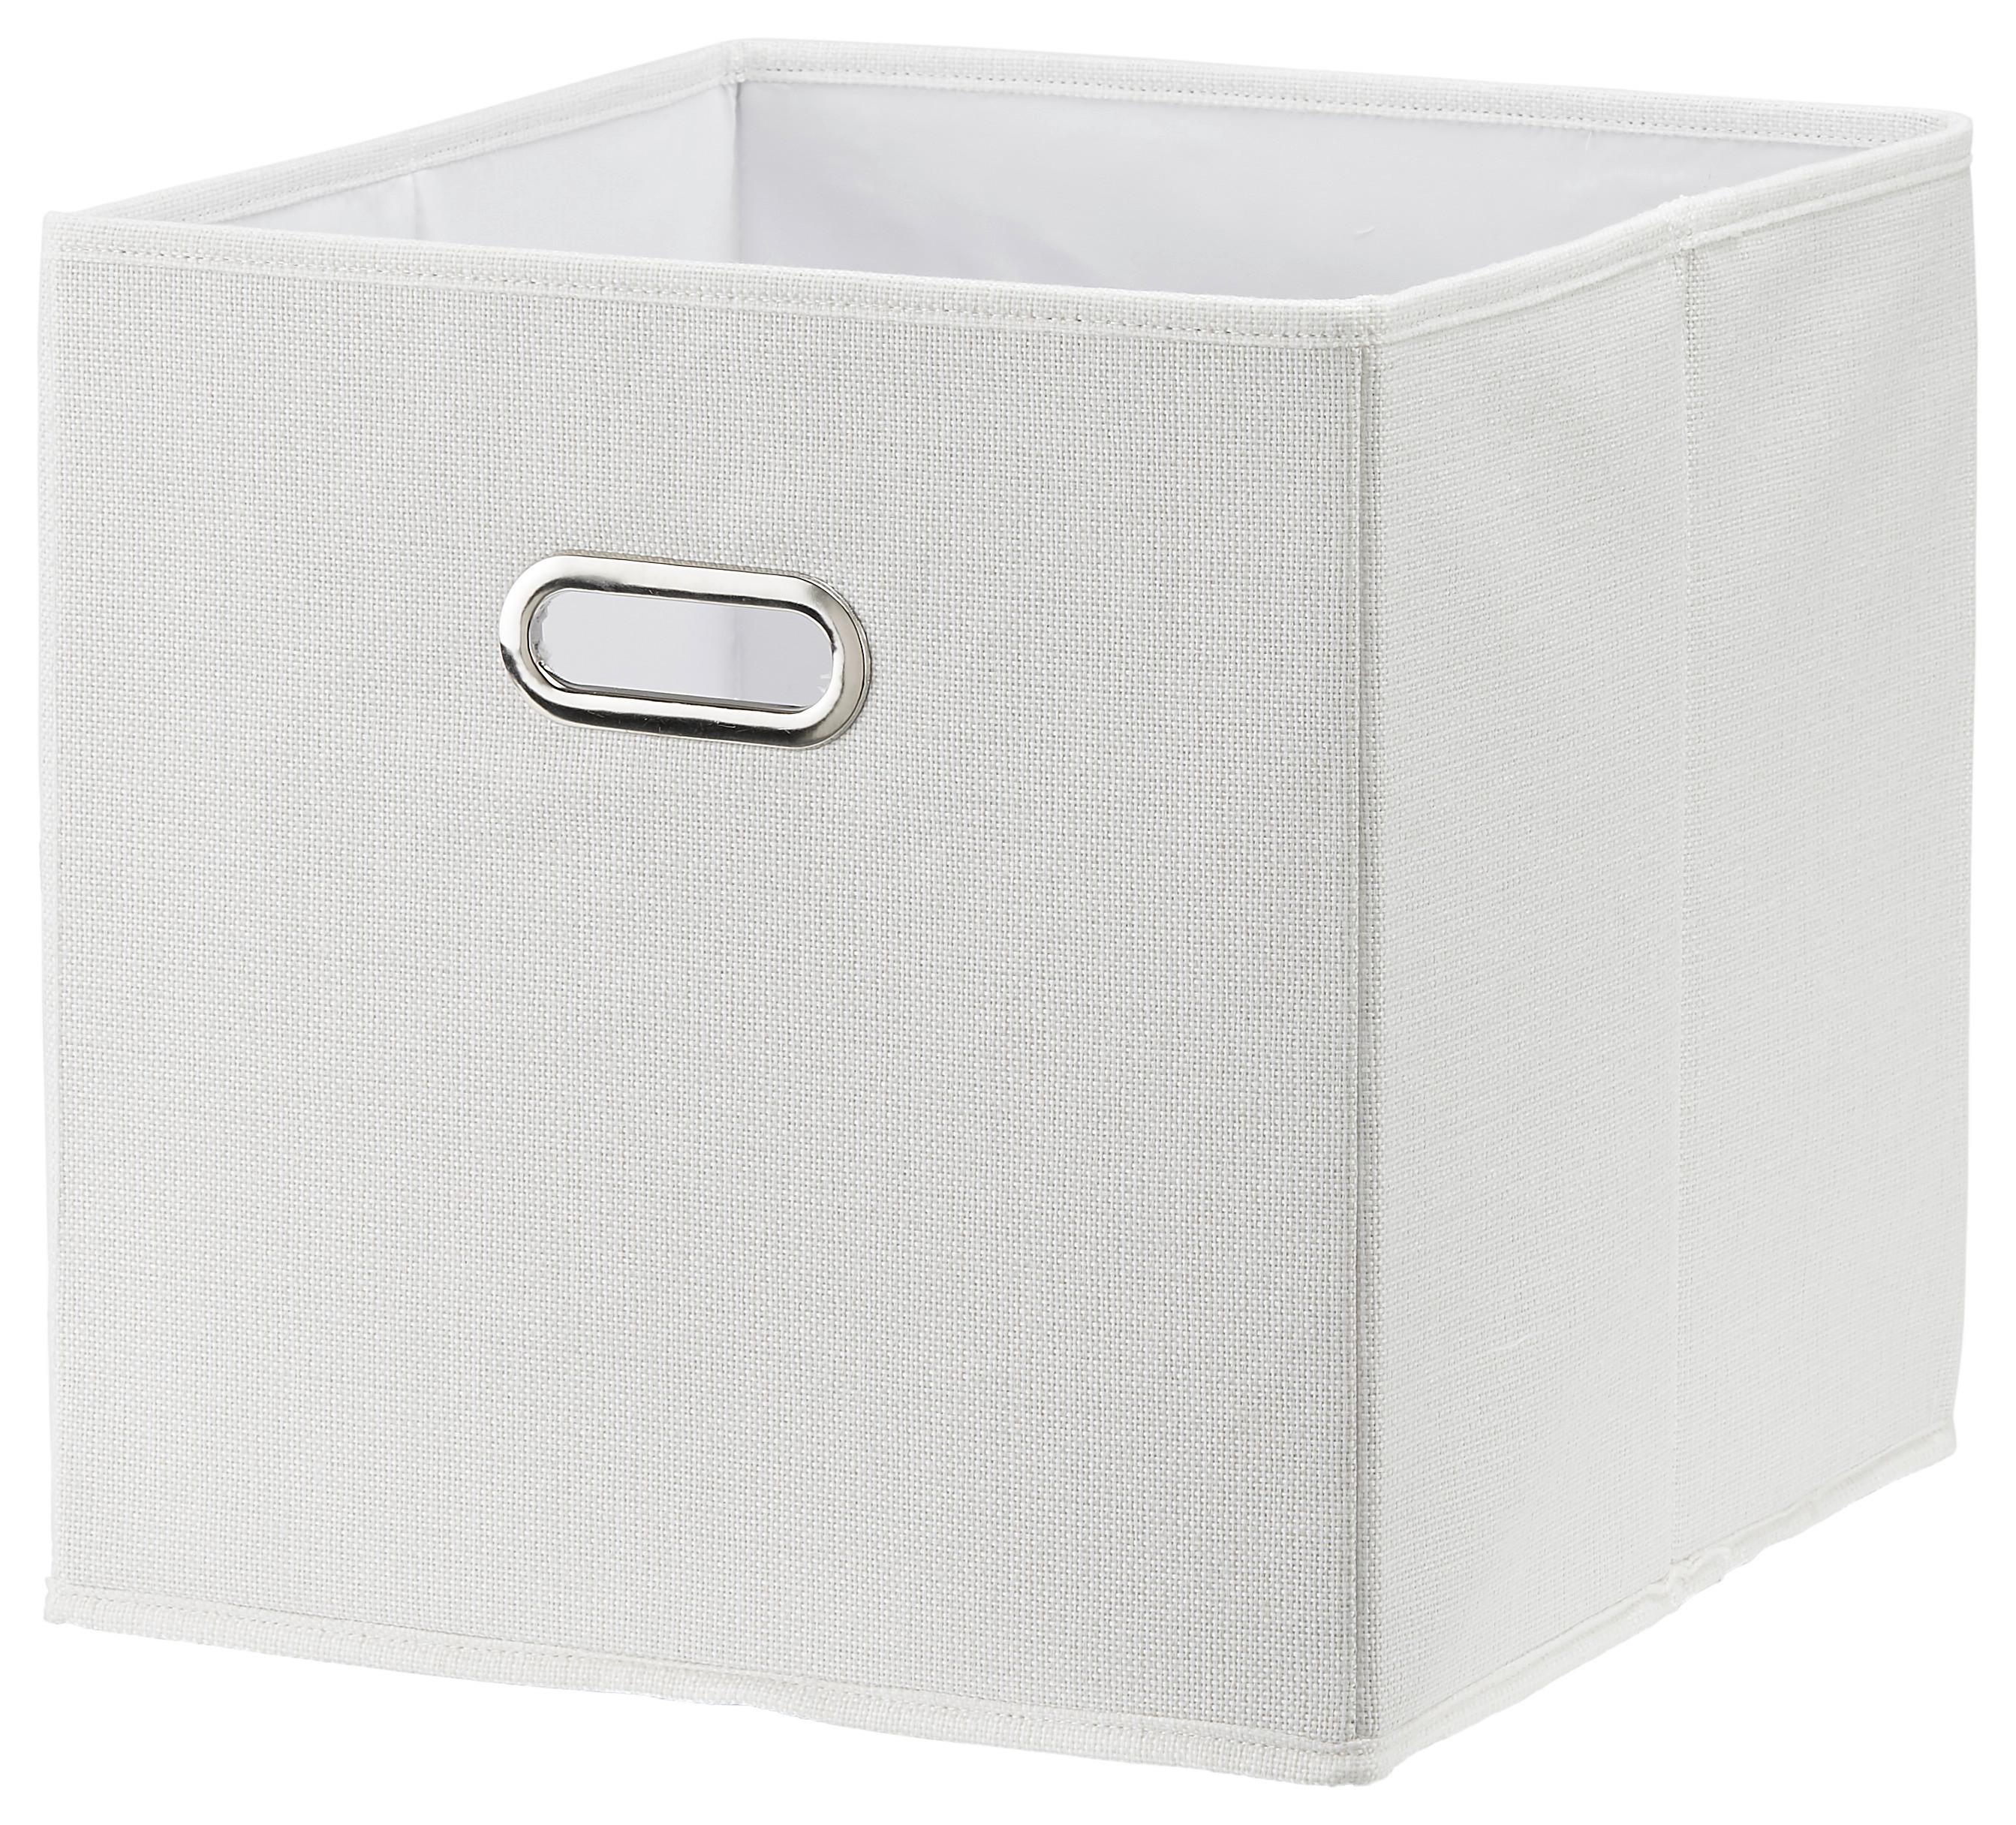 Flatbox Bobby ca. 34l - Weiß, MODERN, Karton/Textil (33/32/33cm) - Premium Living